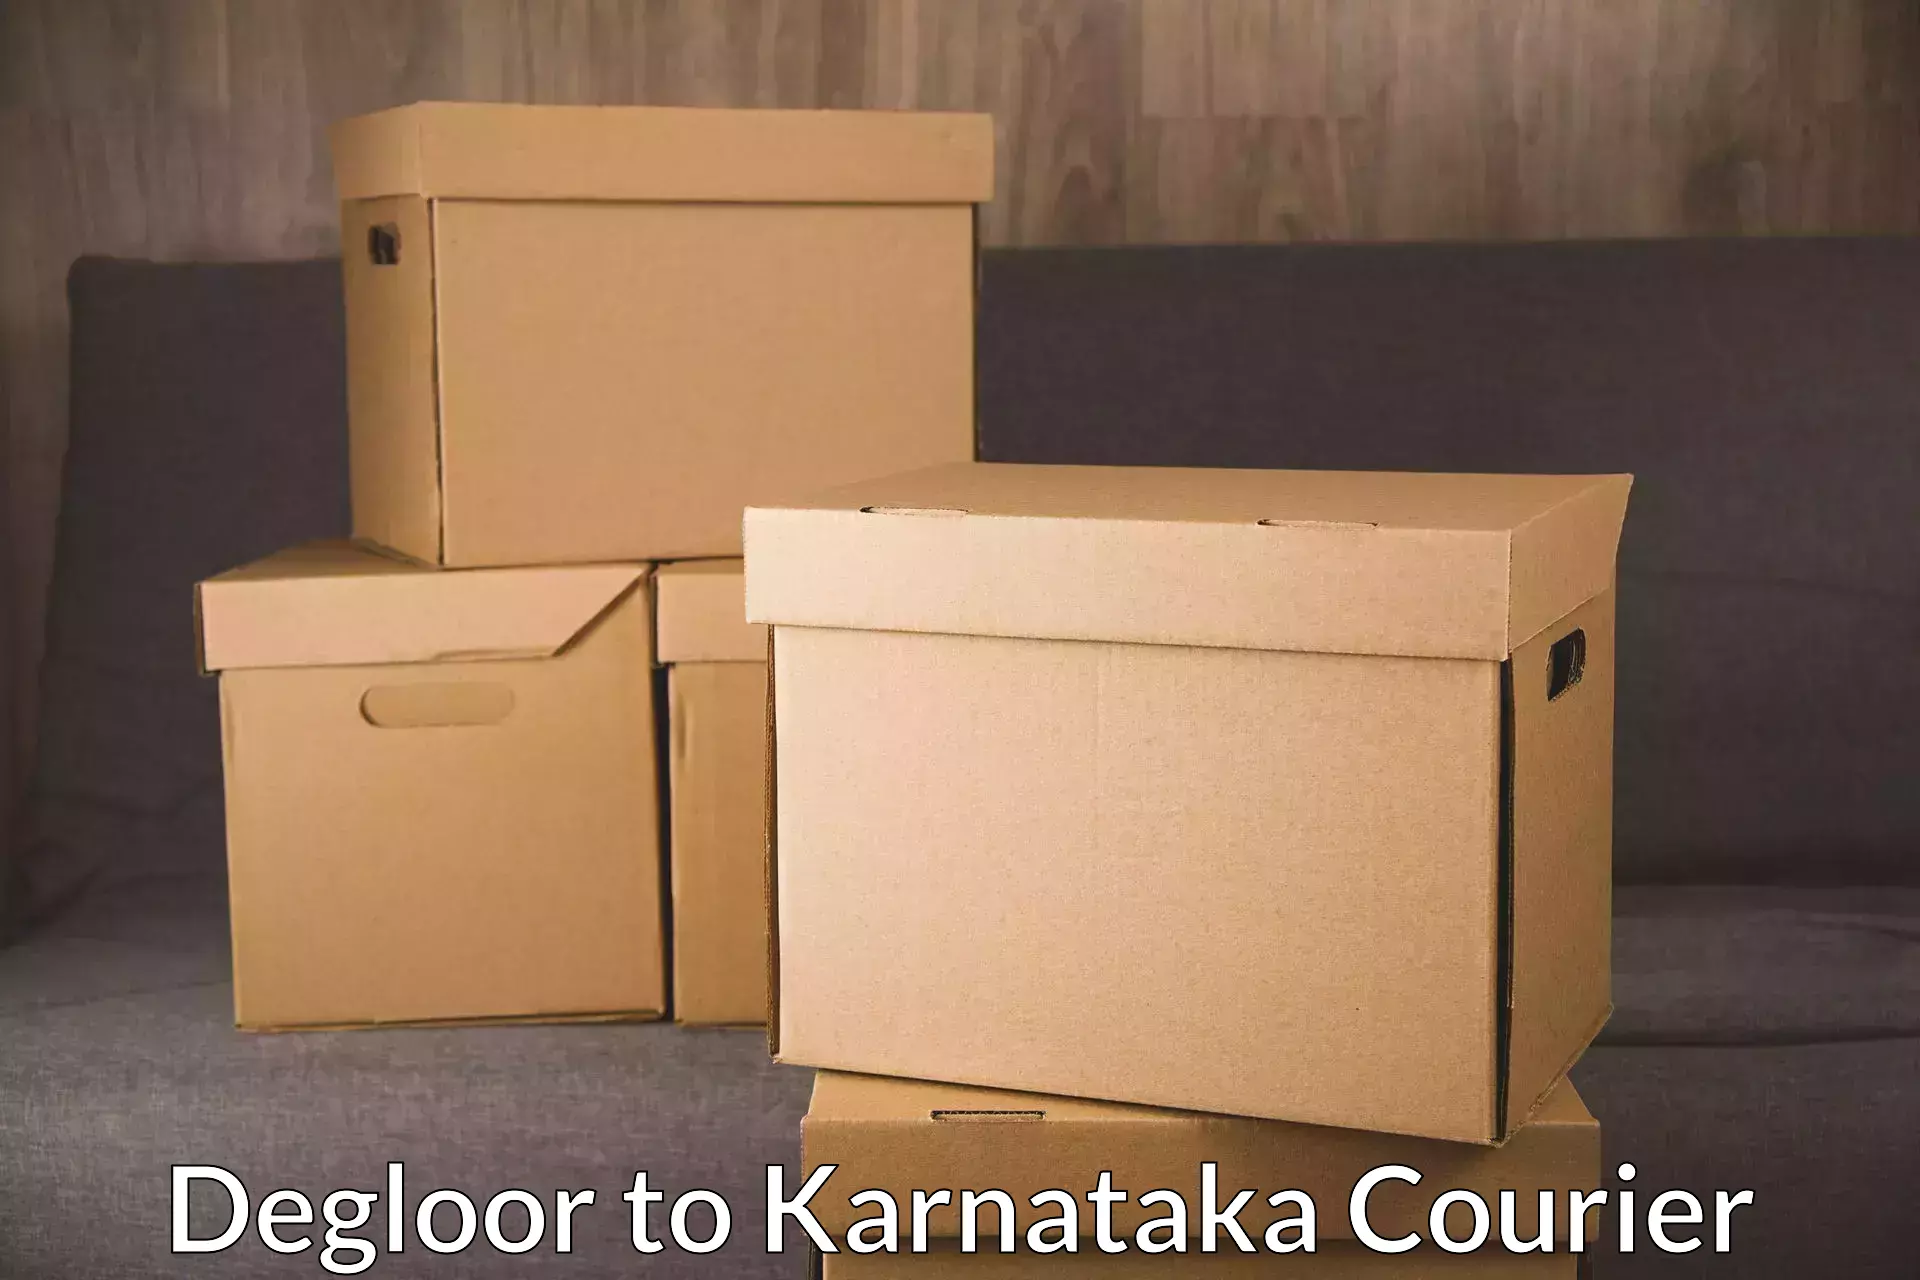 On-demand courier Degloor to Karnataka